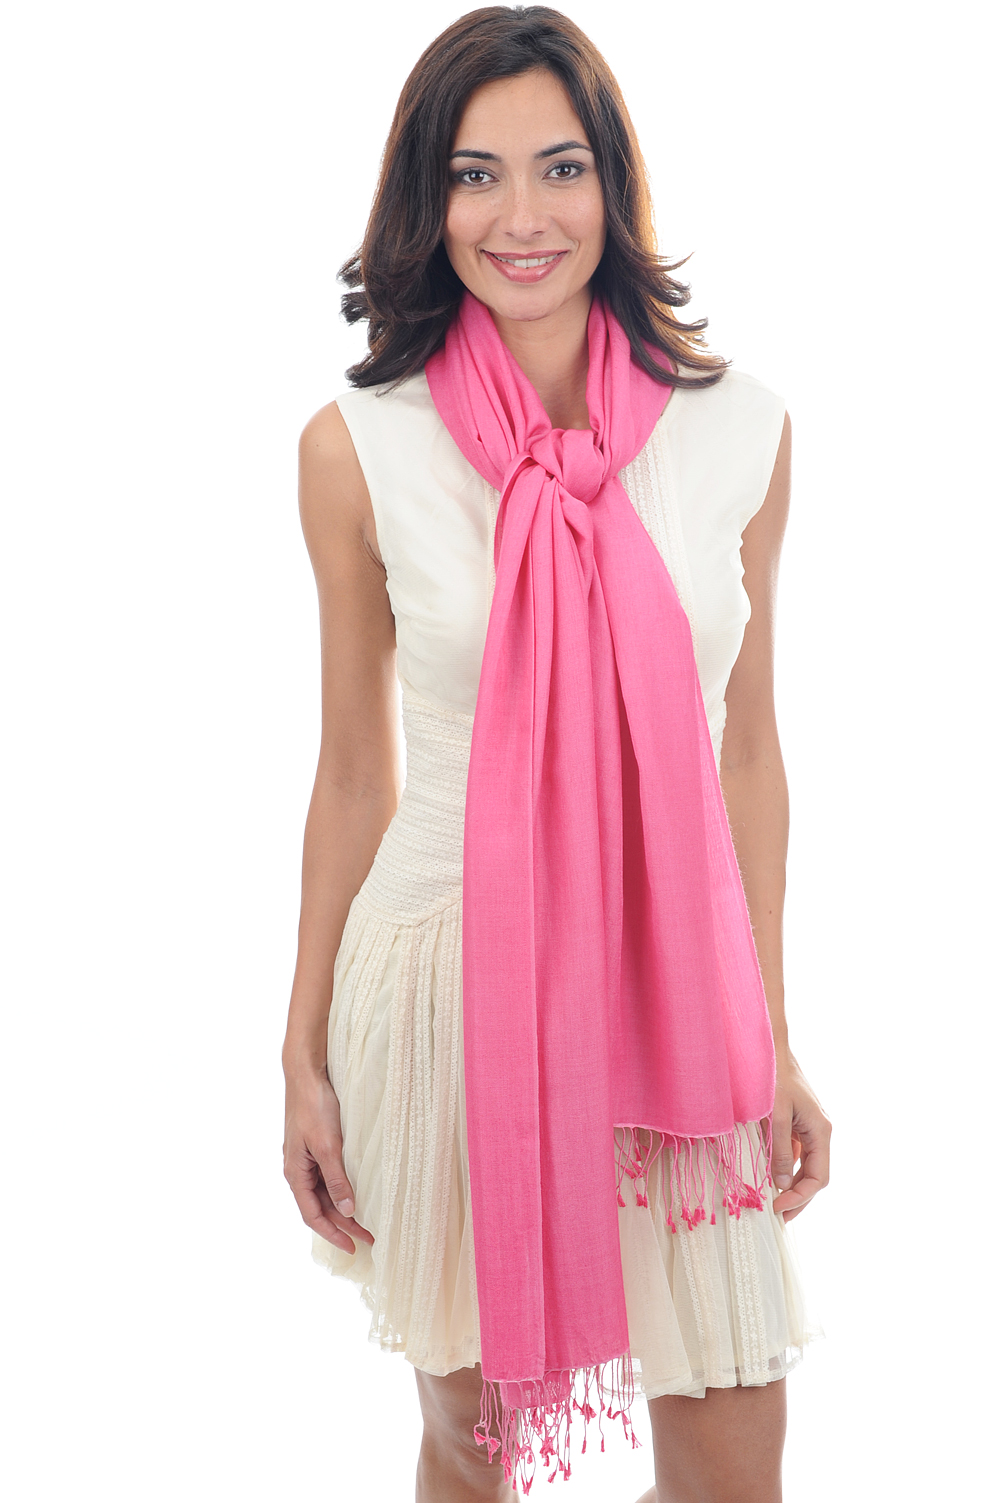 Cachemire et Soie pull femme platine rose soutenu 201 cm x 71 cm